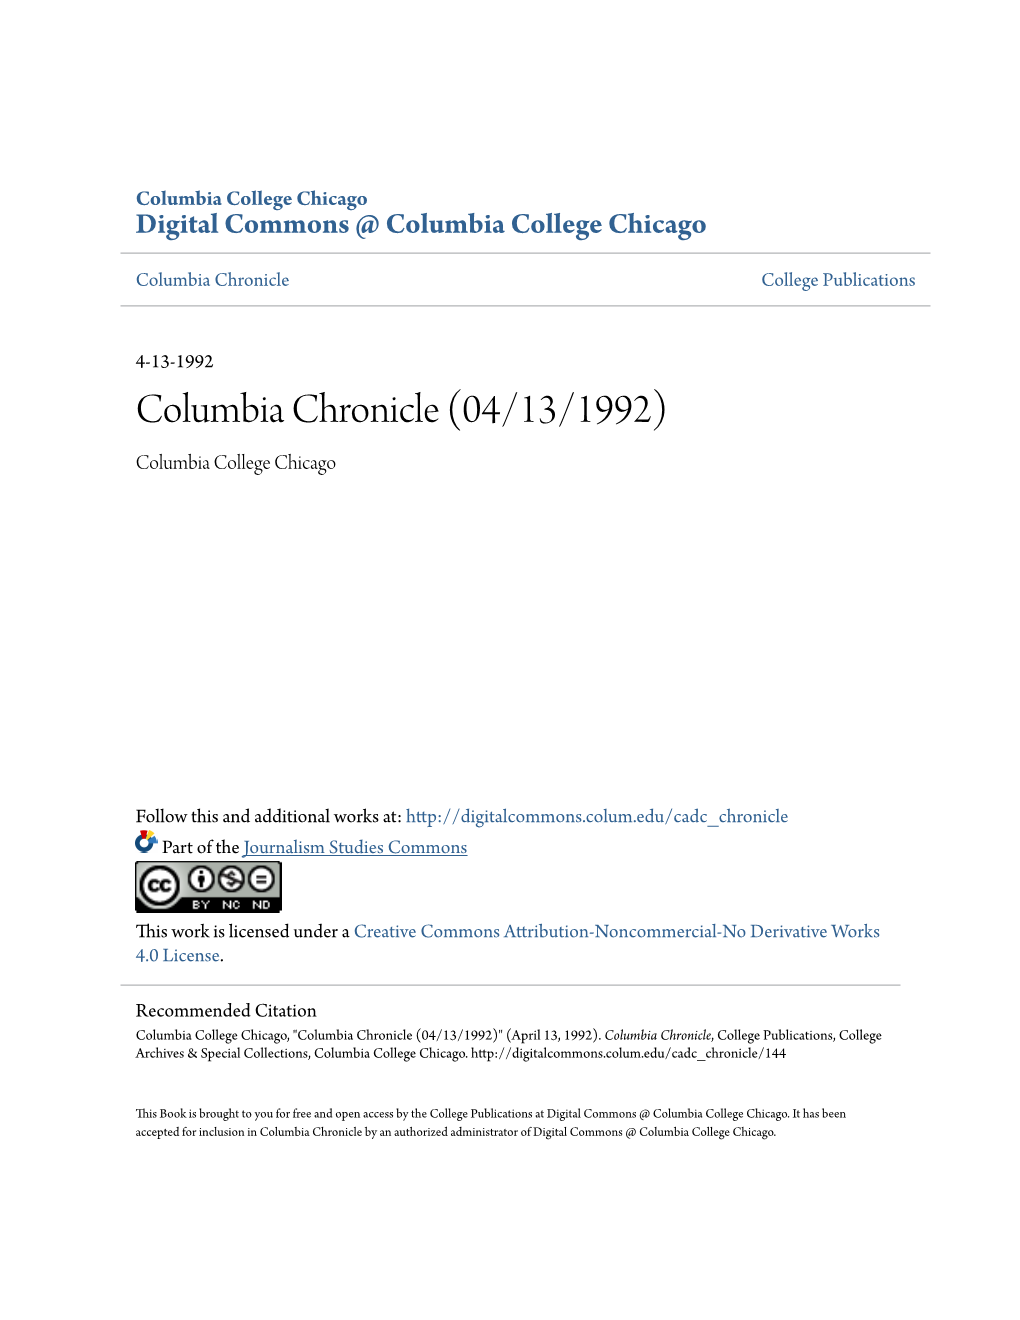 Columbia Chronicle (04/13/1992) Columbia College Chicago